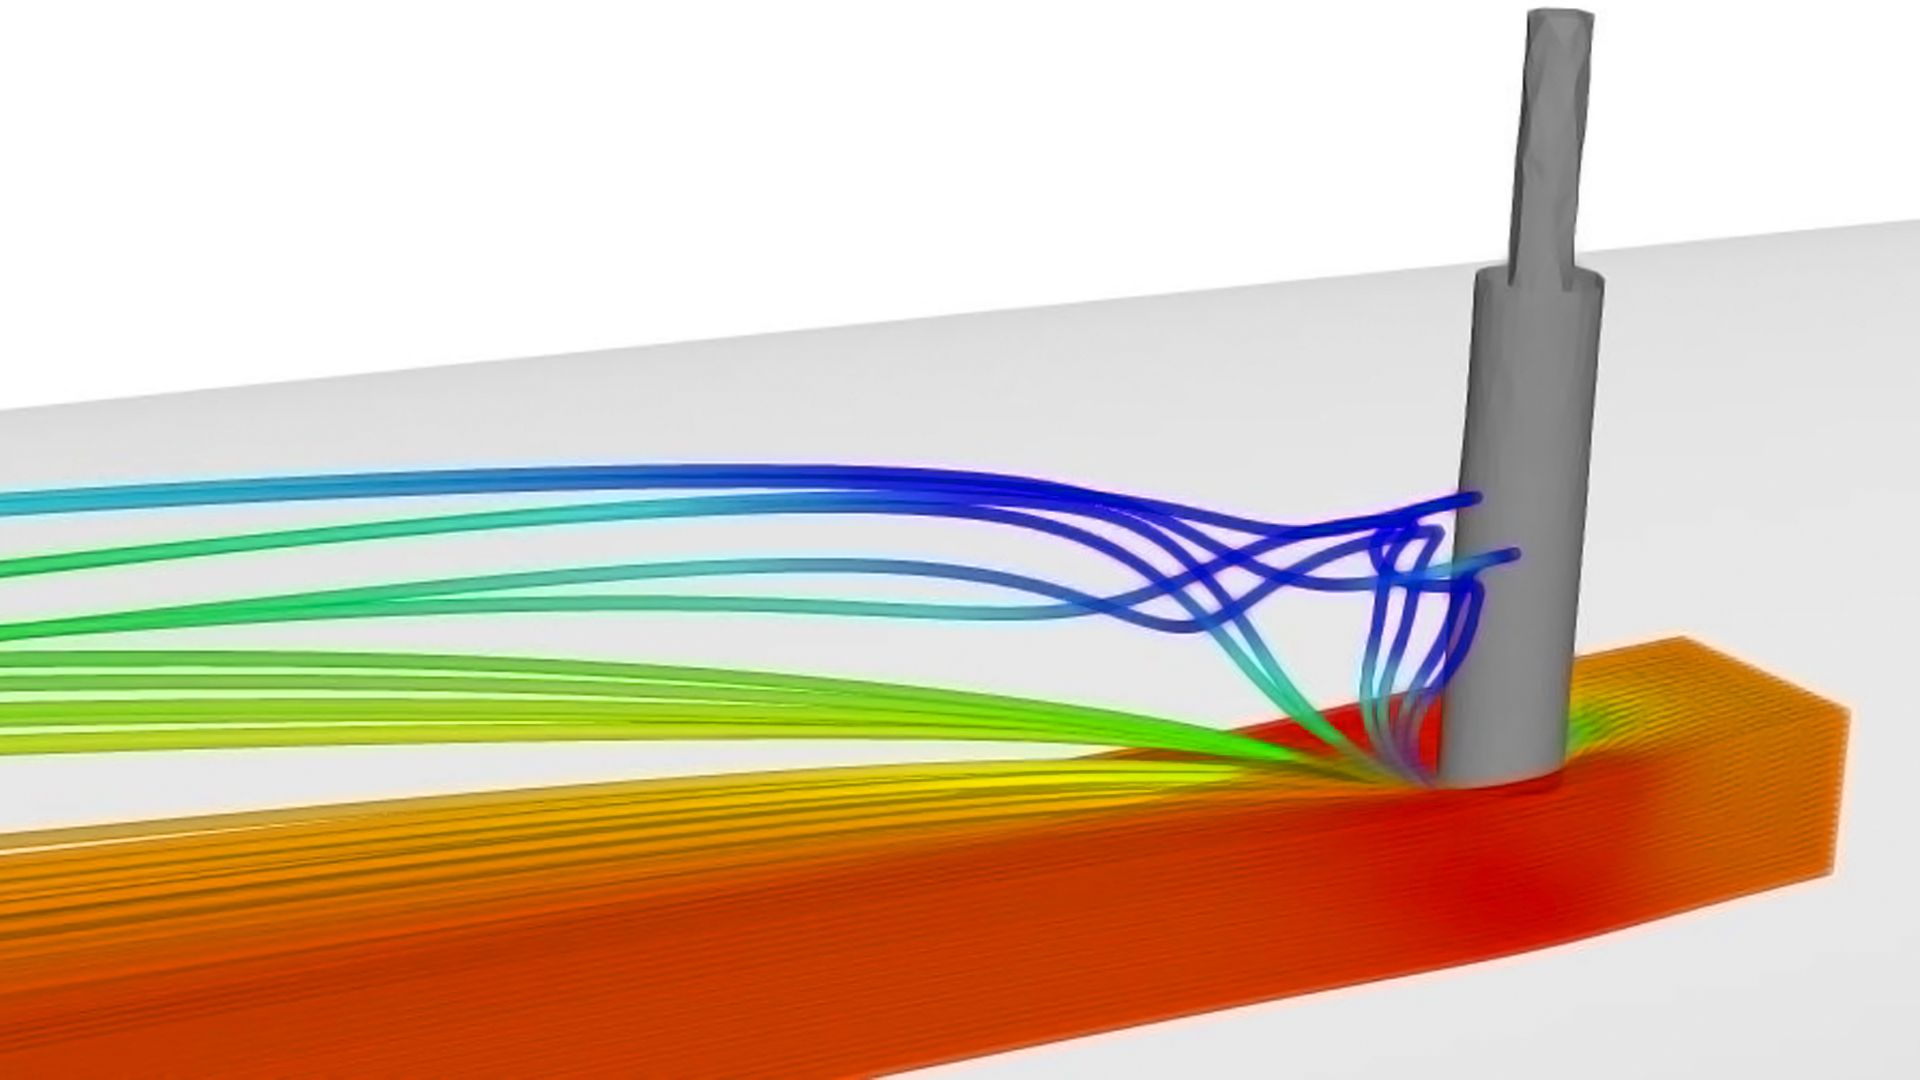 Computational Fluid Dynamics model (heat map of liquid flow)